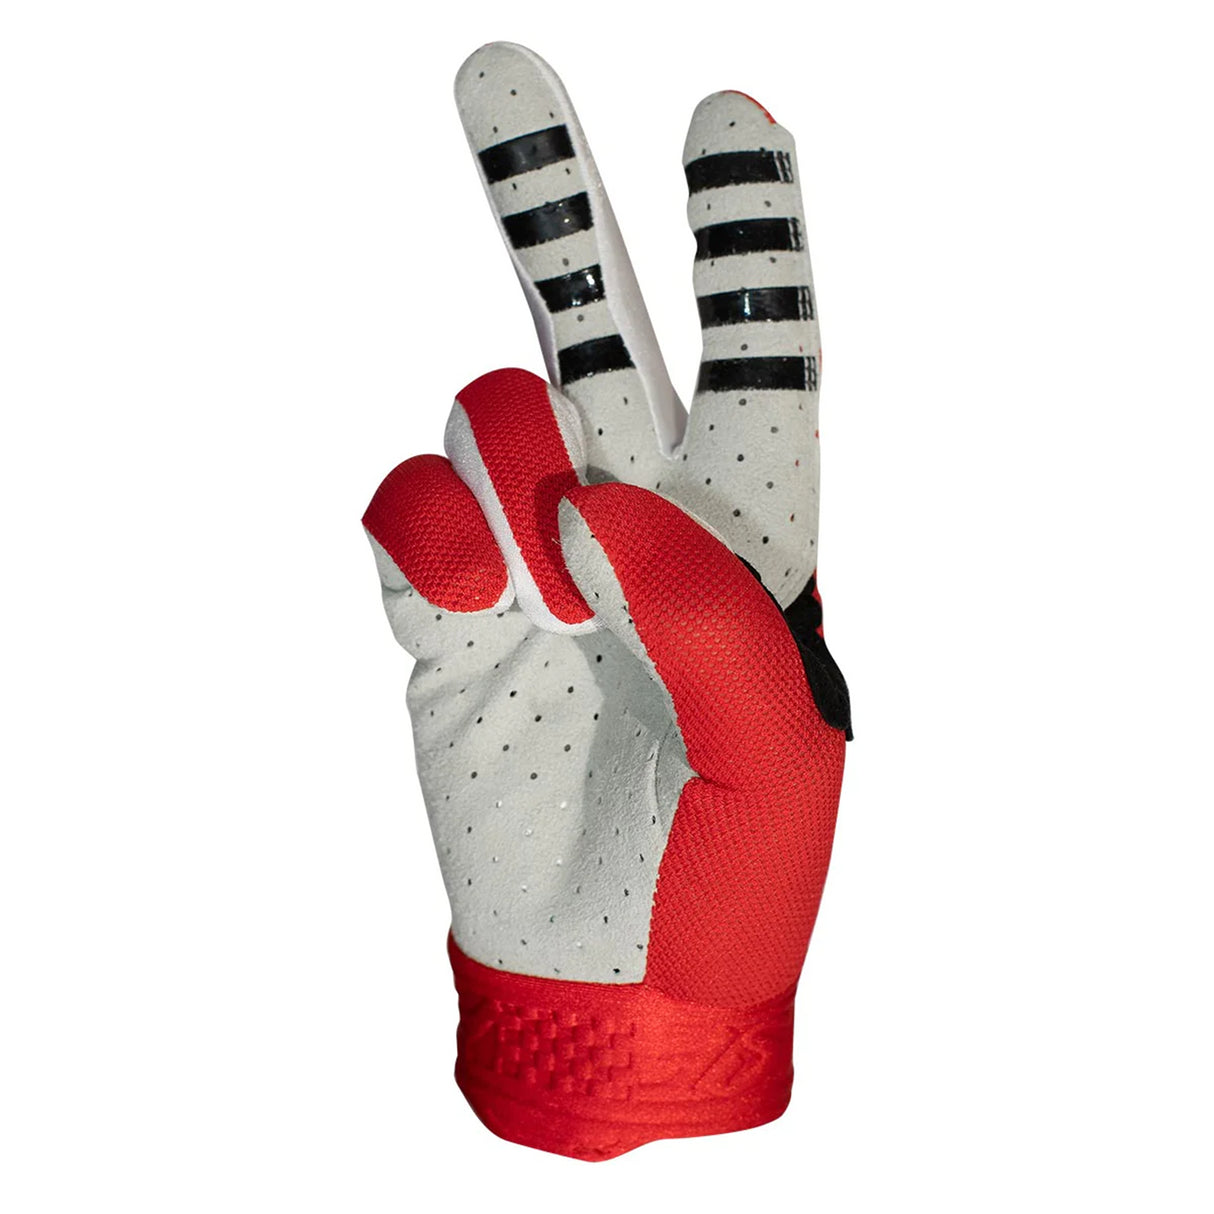 Fasthouse Blitz Gloves